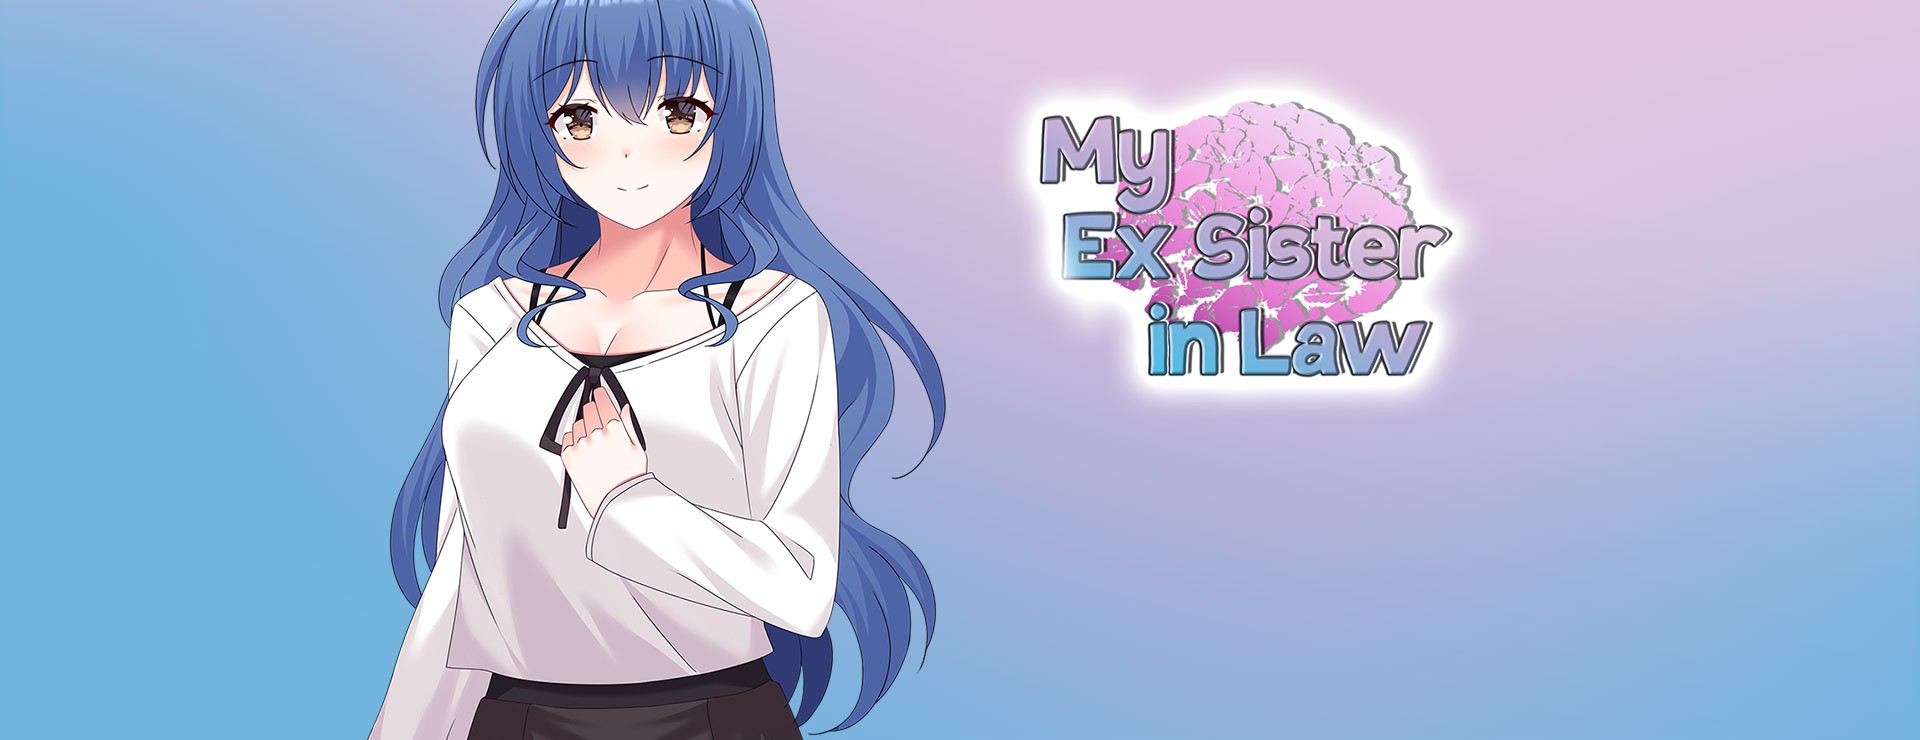 My Ex Sister In Law - ビジュアルノベル ゲーム